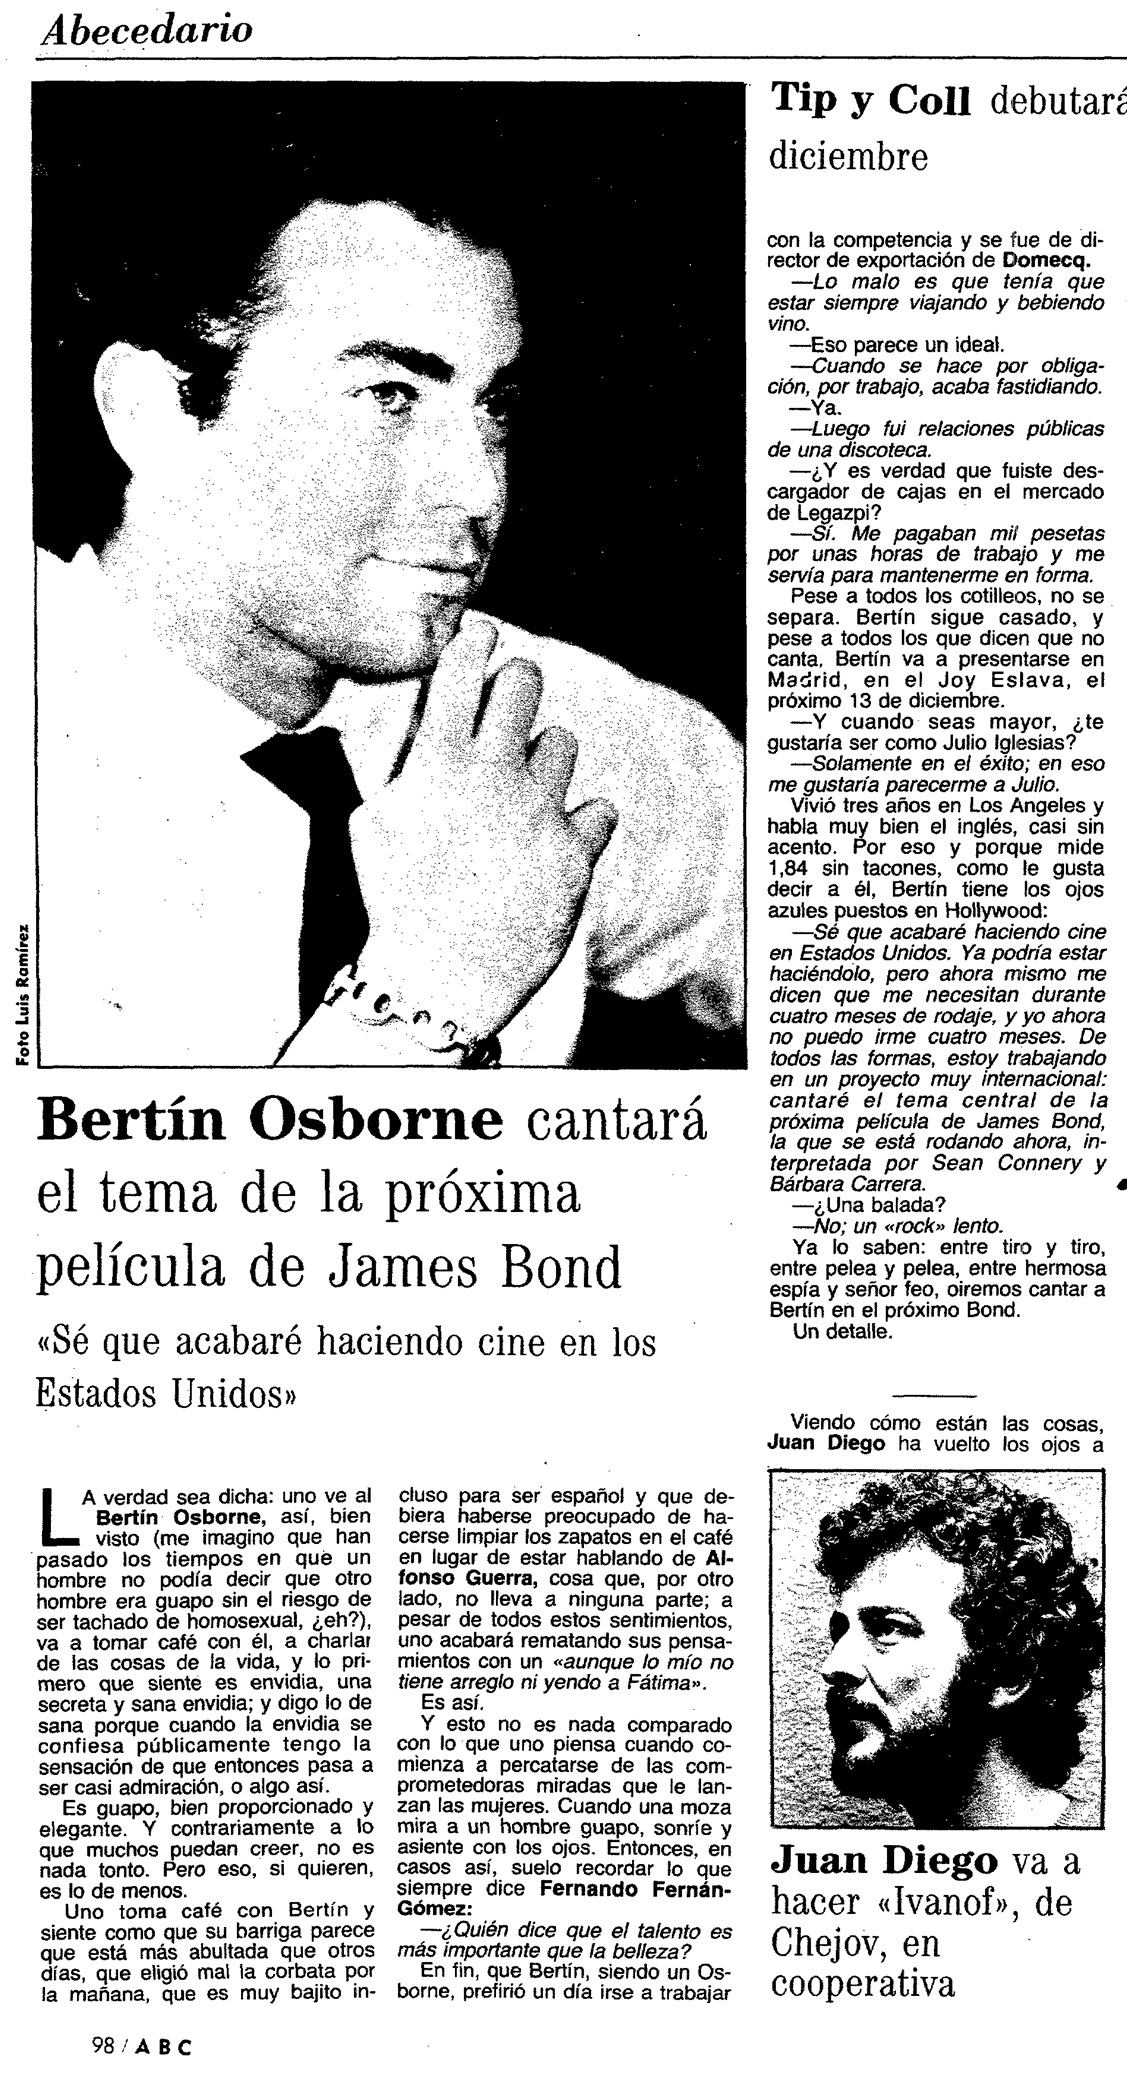 13-1982-11-09-ABC-Madrid-098-Bertin-Osborne.jpg